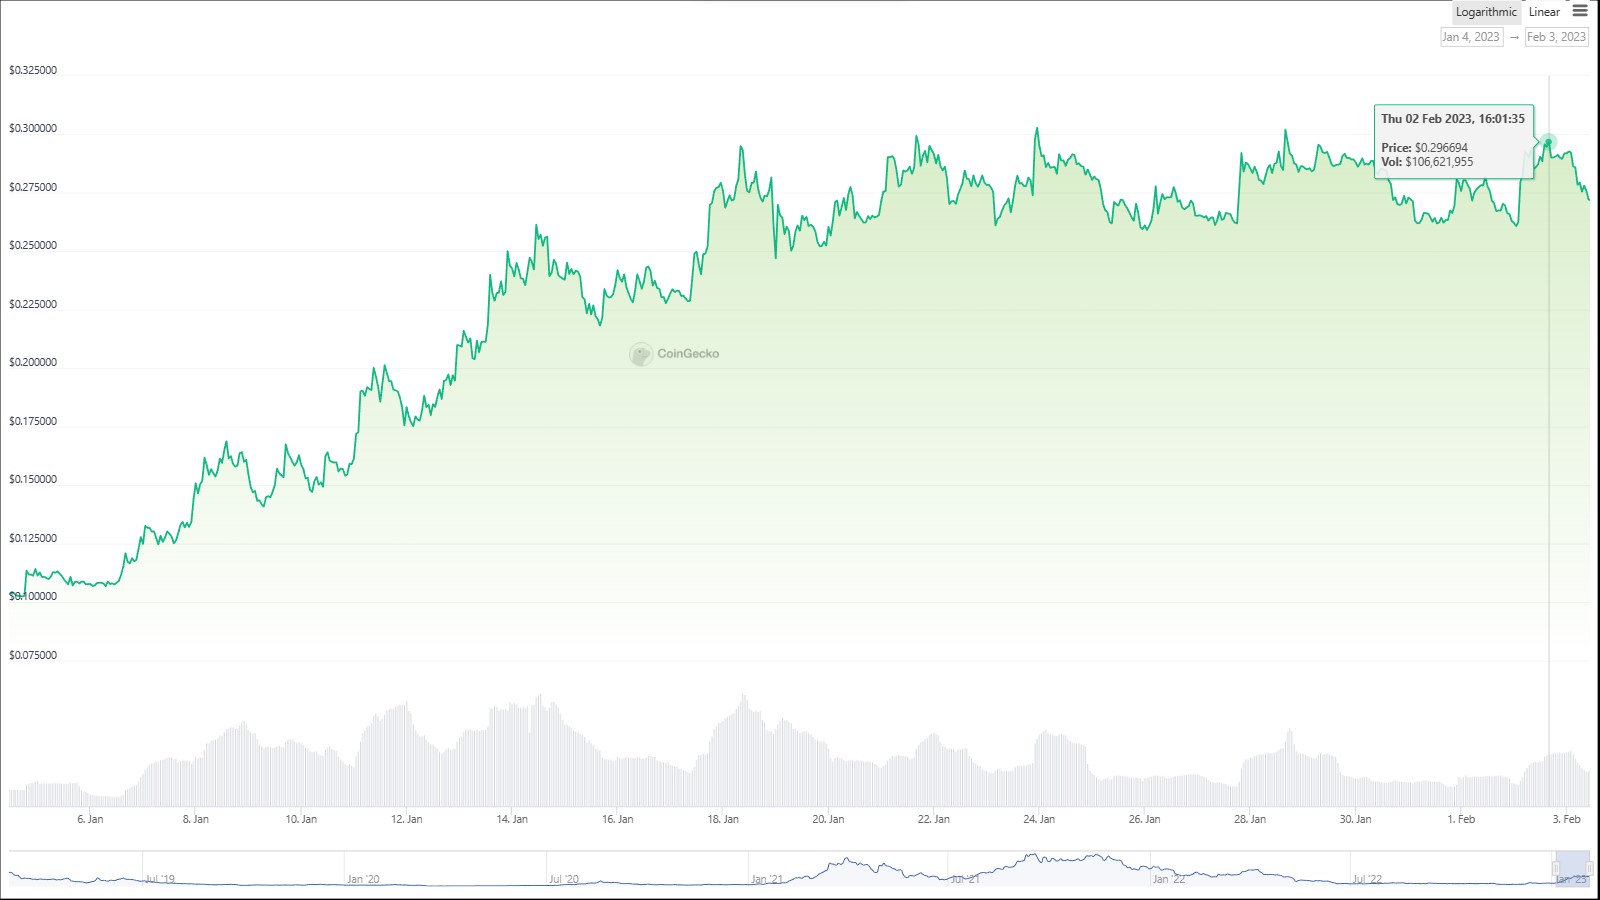 Nguồn Coingecko: Giá token FET từ 04.01.2023 đến 03.02.2023